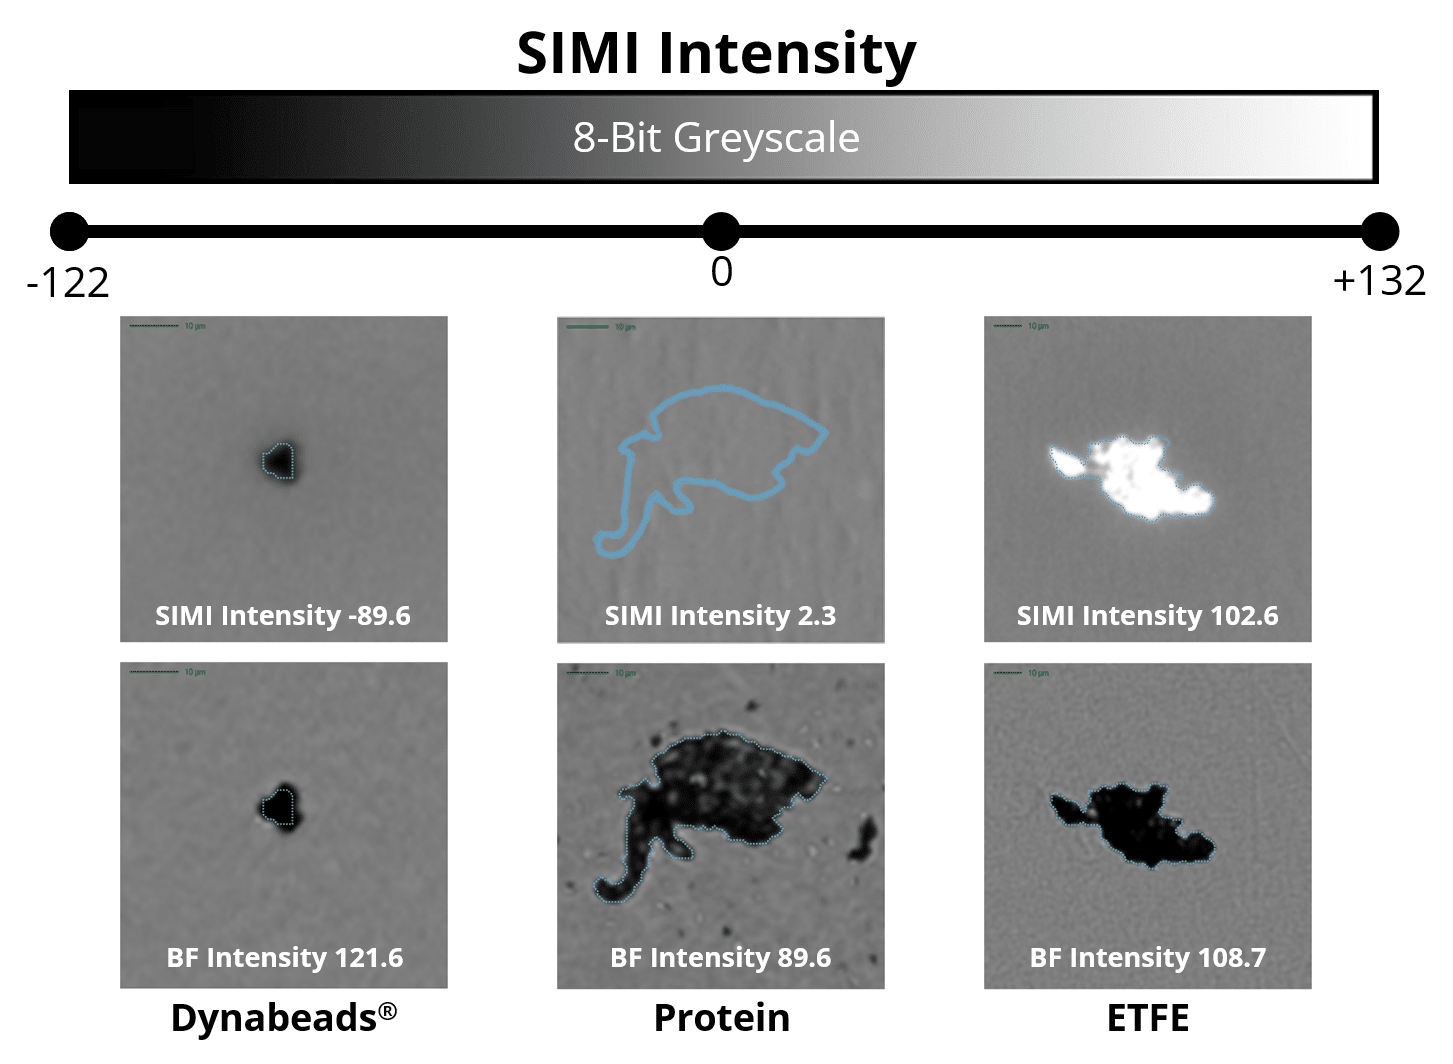 SIMI intensity 1